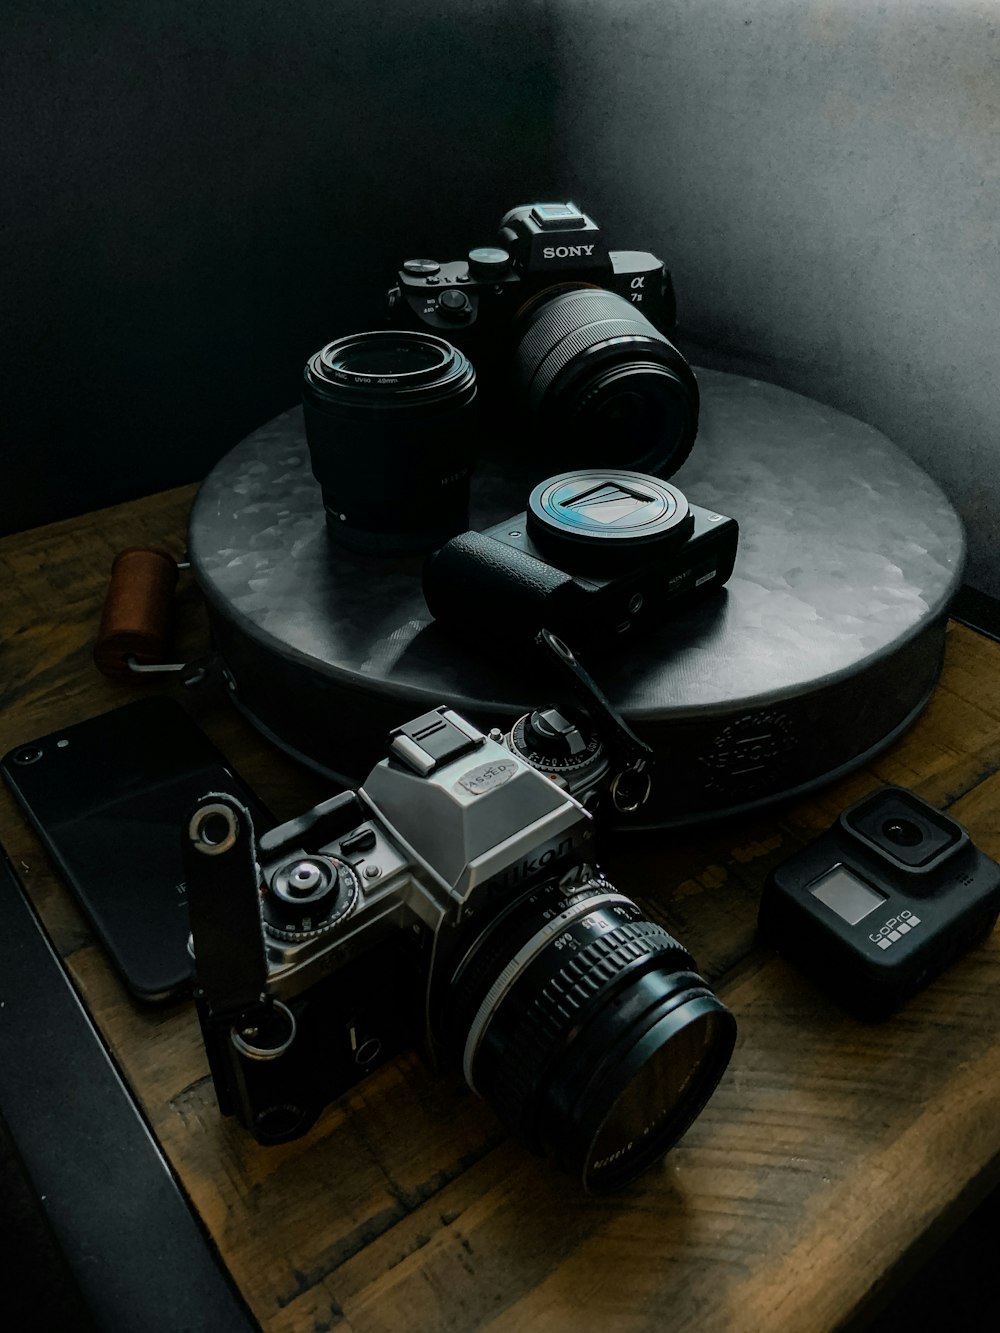 black and silver dslr camera beside black camera